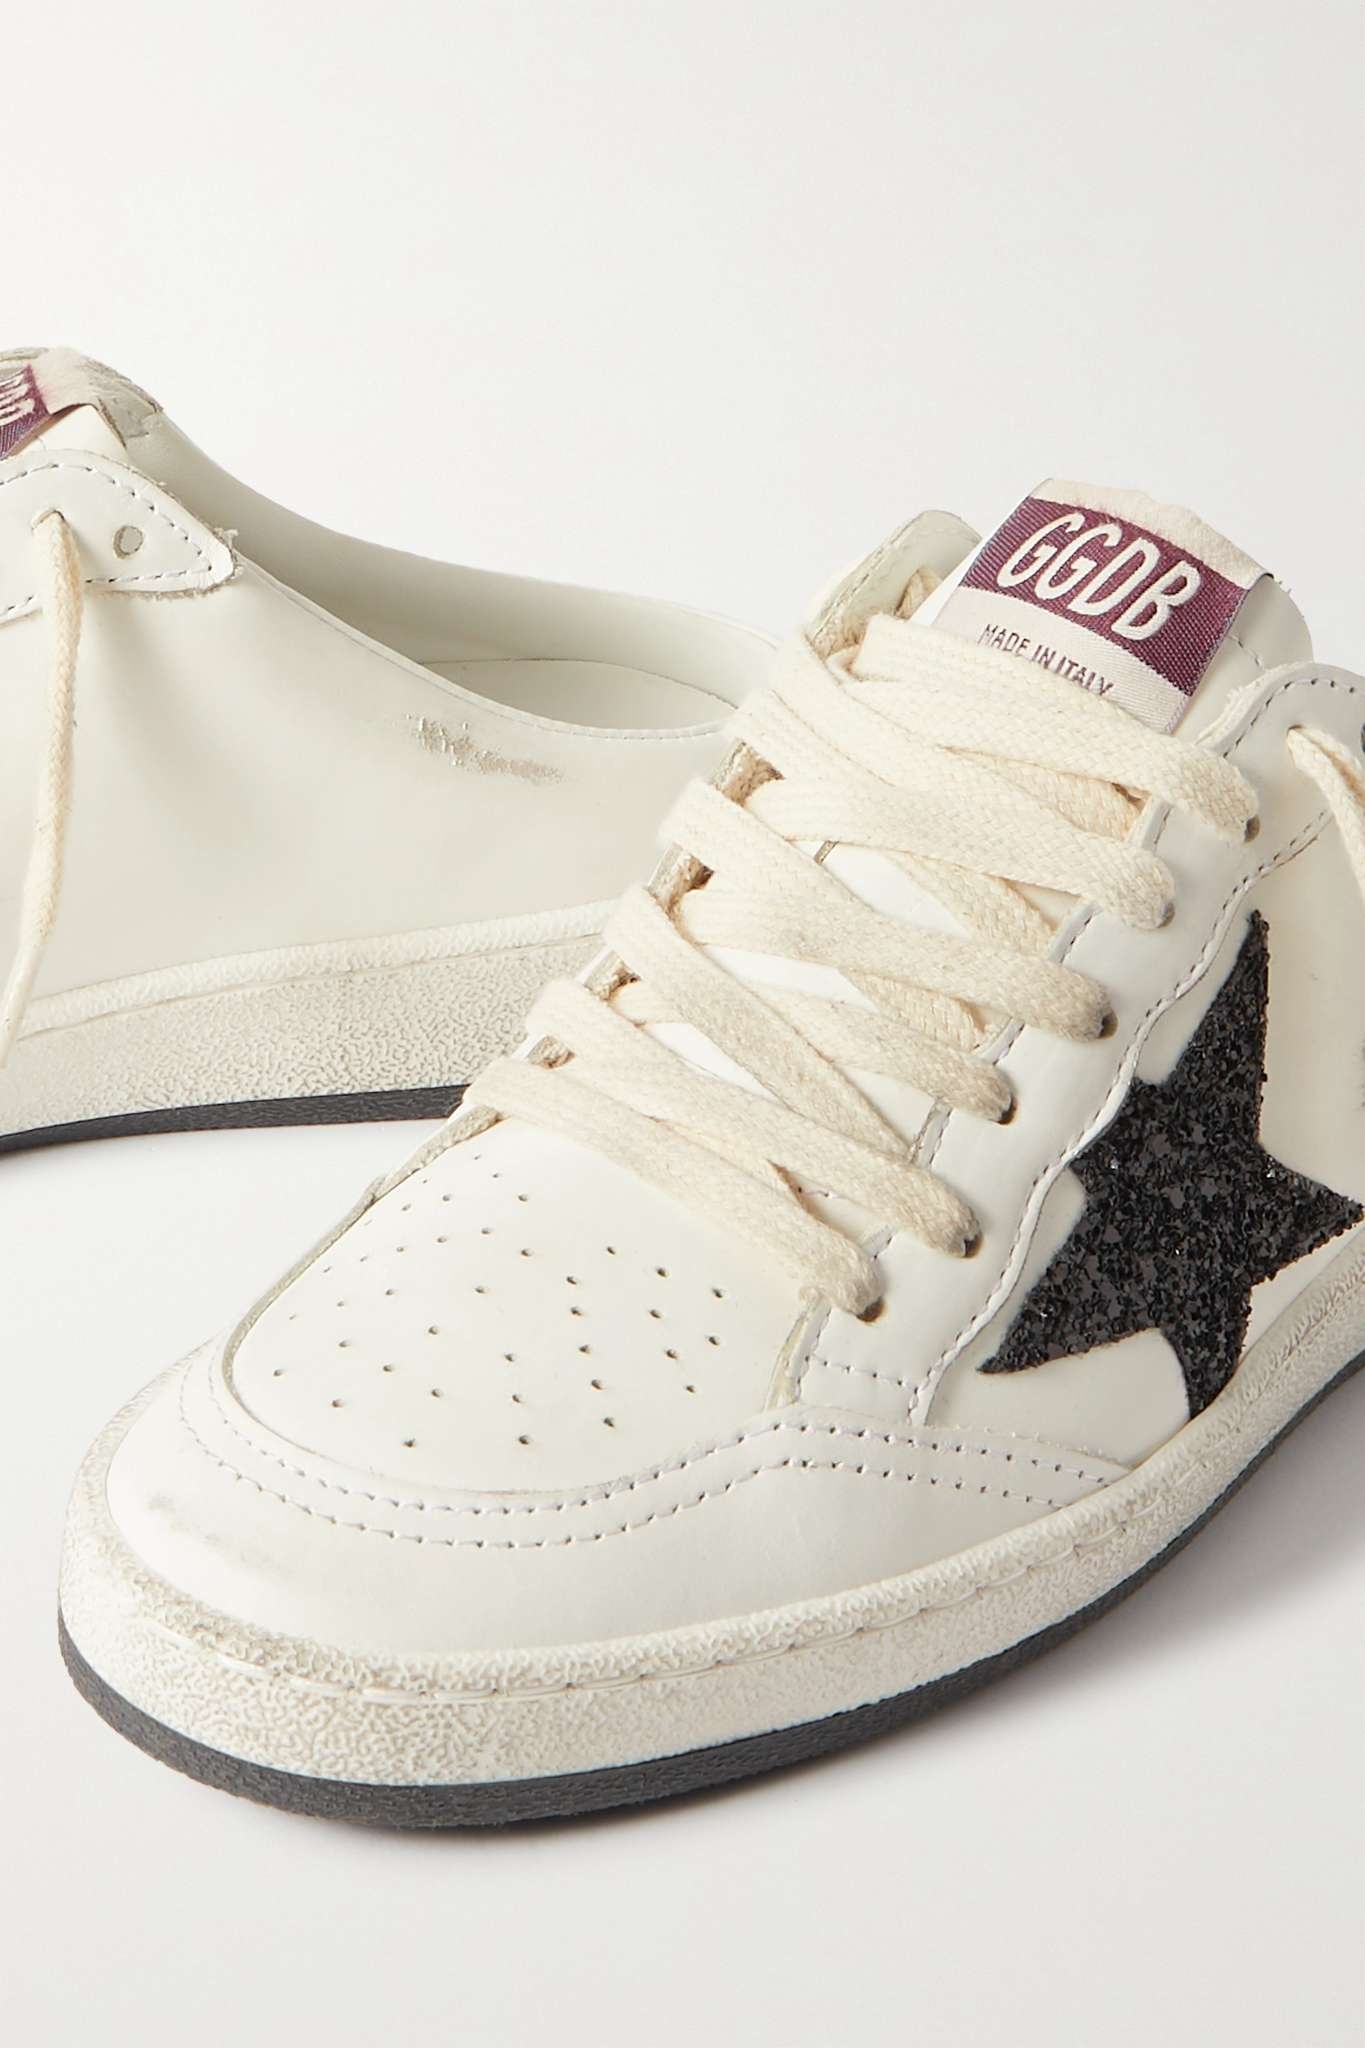 Ball Star Sabot glittered leather slip-on sneakers - 4